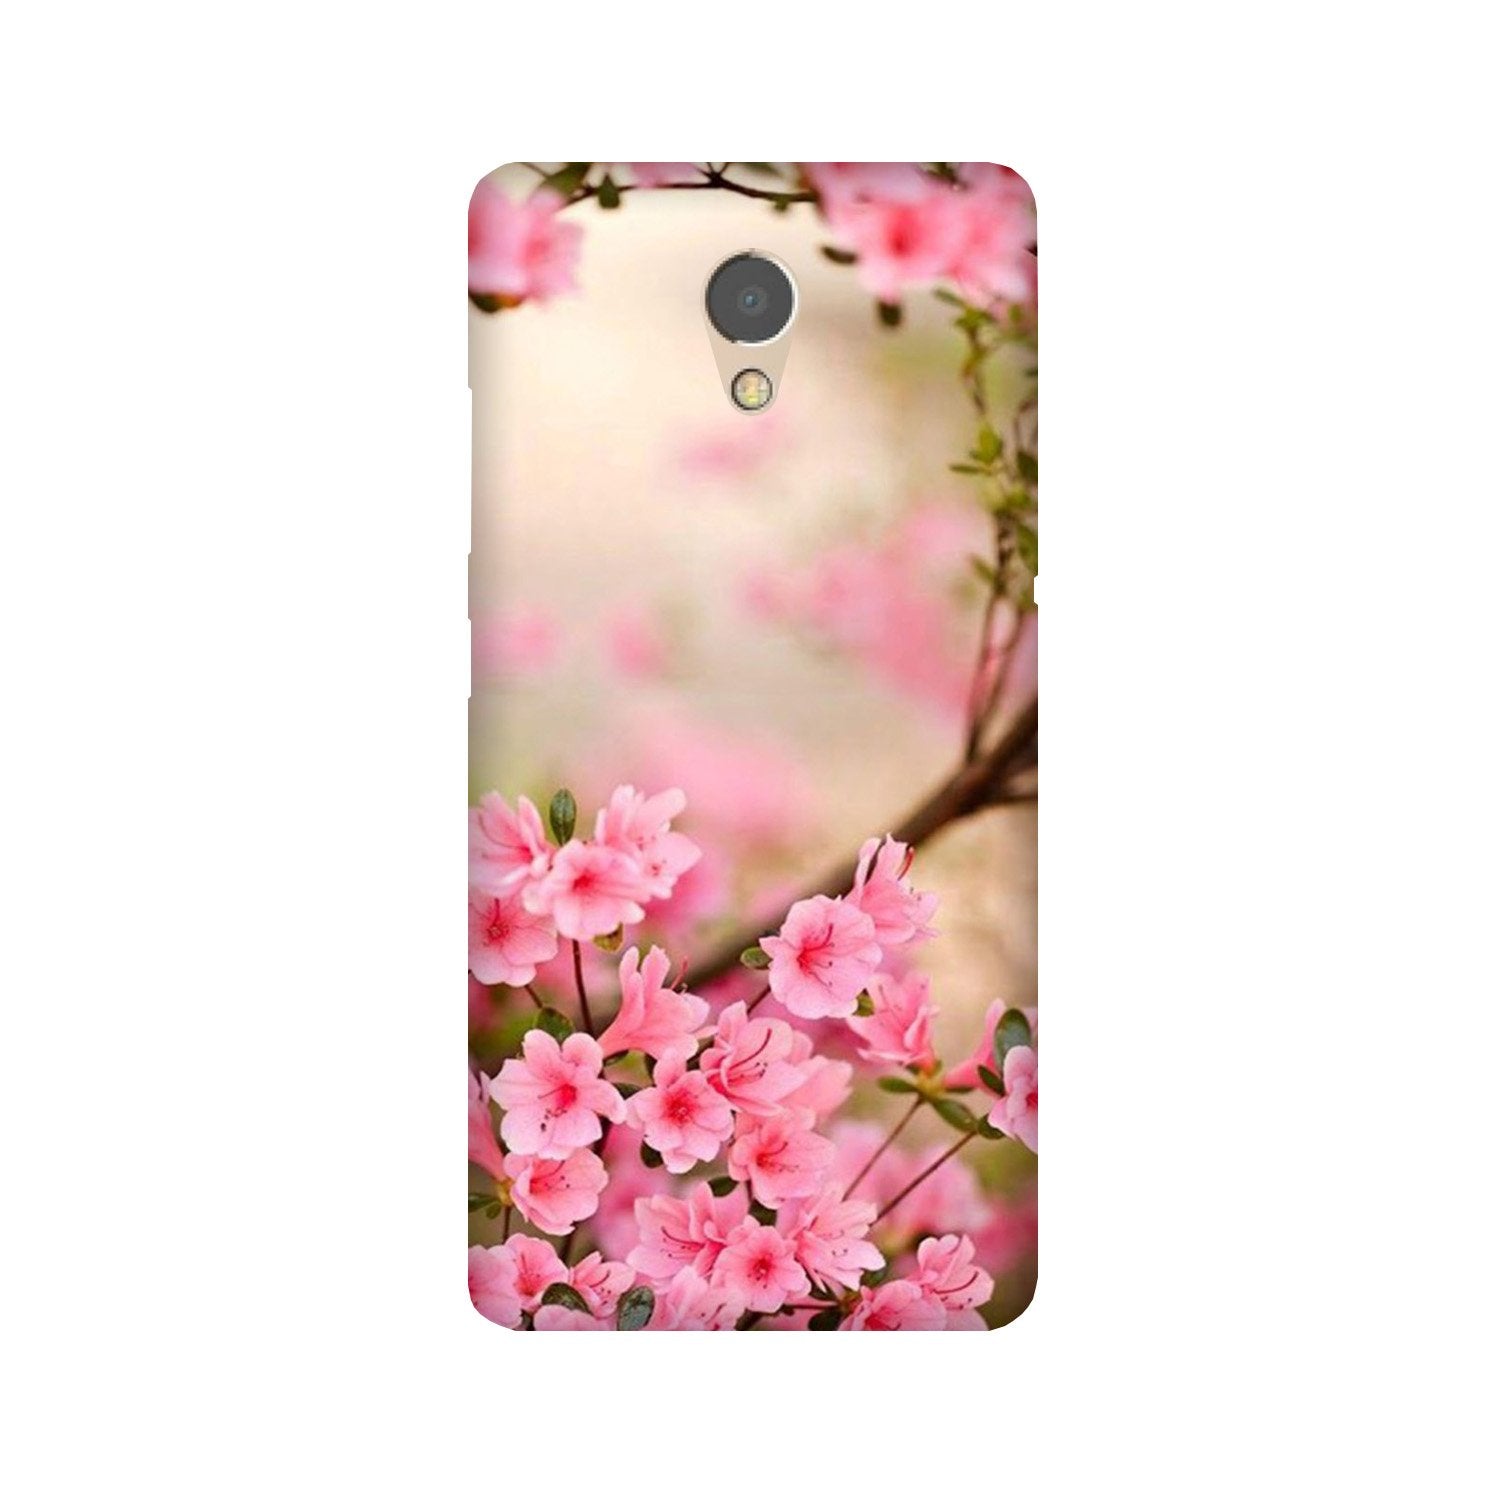 Pink flowers Case for Lenovo P2